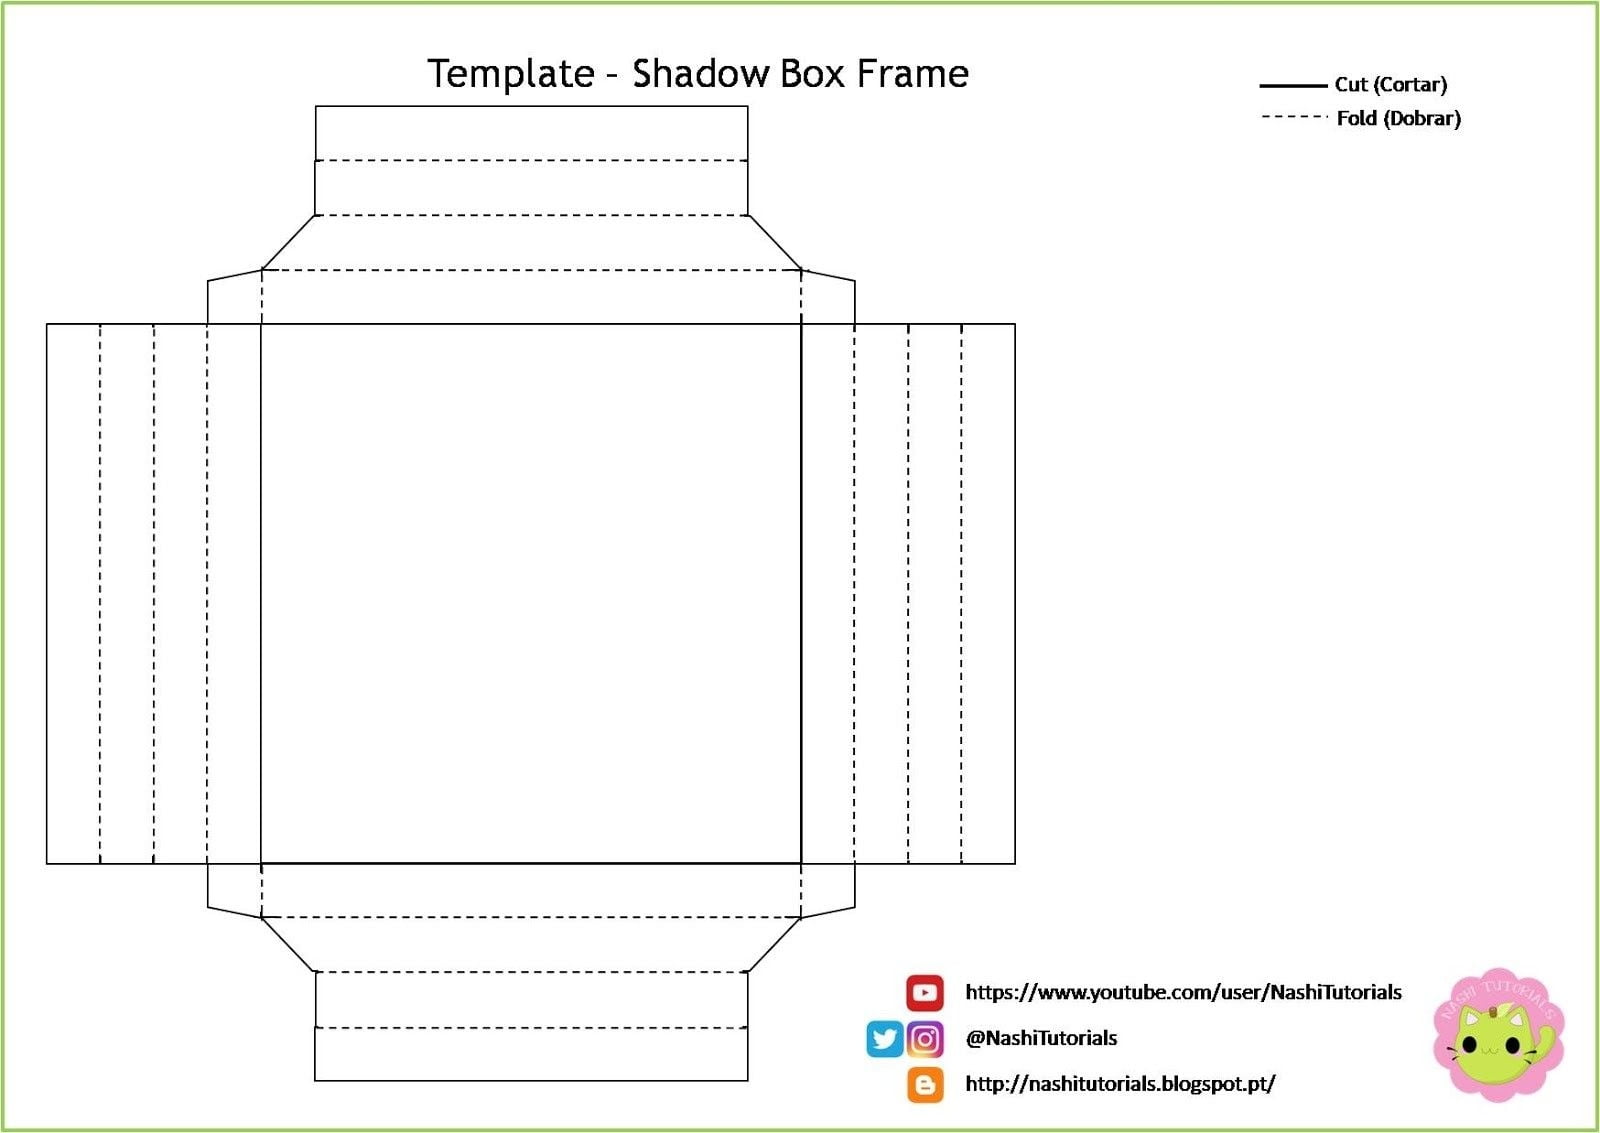 Nashi Tutorials DIY Shadow Box Frame Paper Template Molduras De Caixas Caixa De Sombra Molduras De Caixa De Recorda o